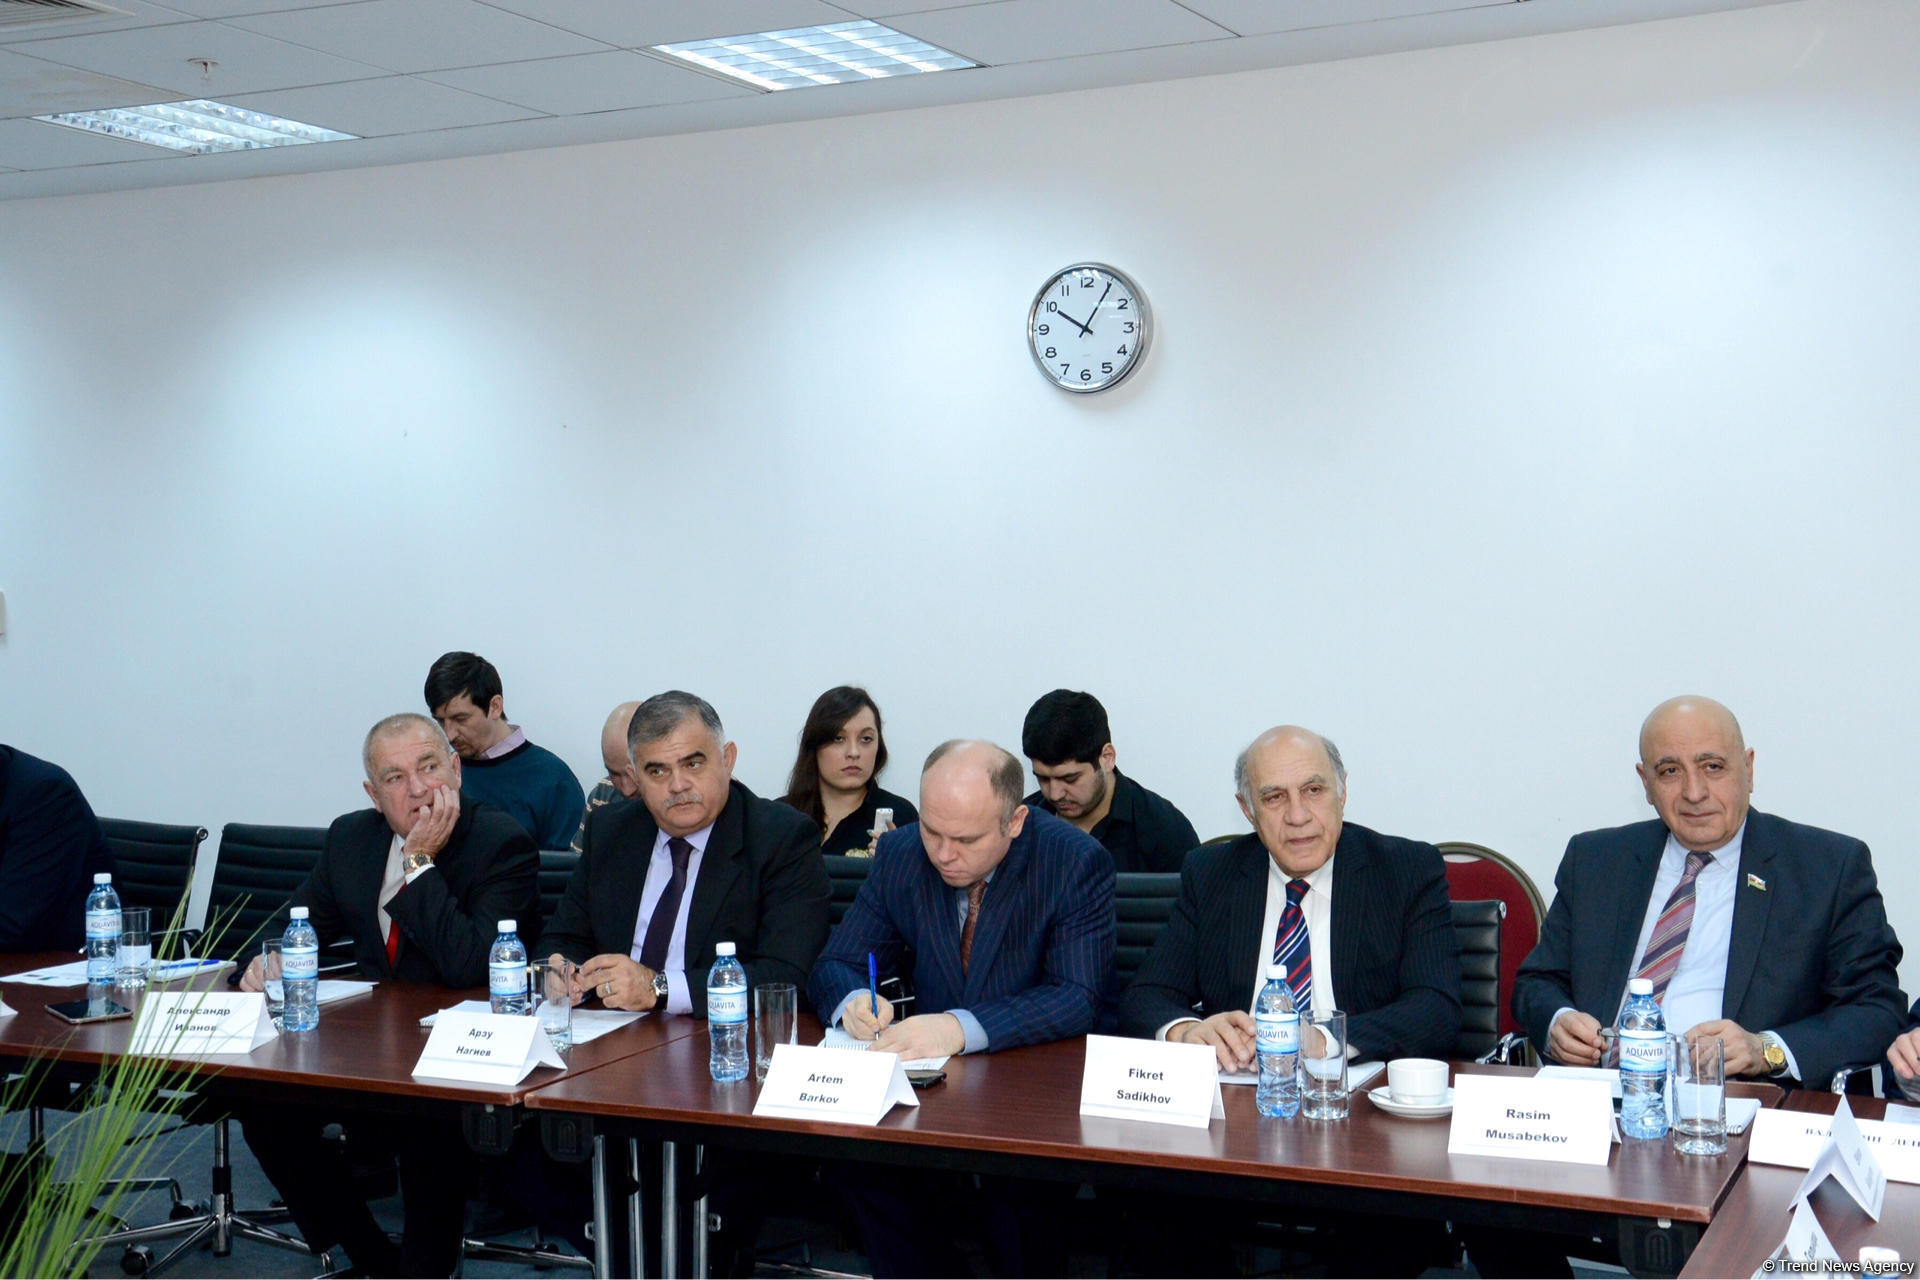 Round table on 25th anniversary of Azerbaijan-Russia ties kicks off in Baku (PHOTO)